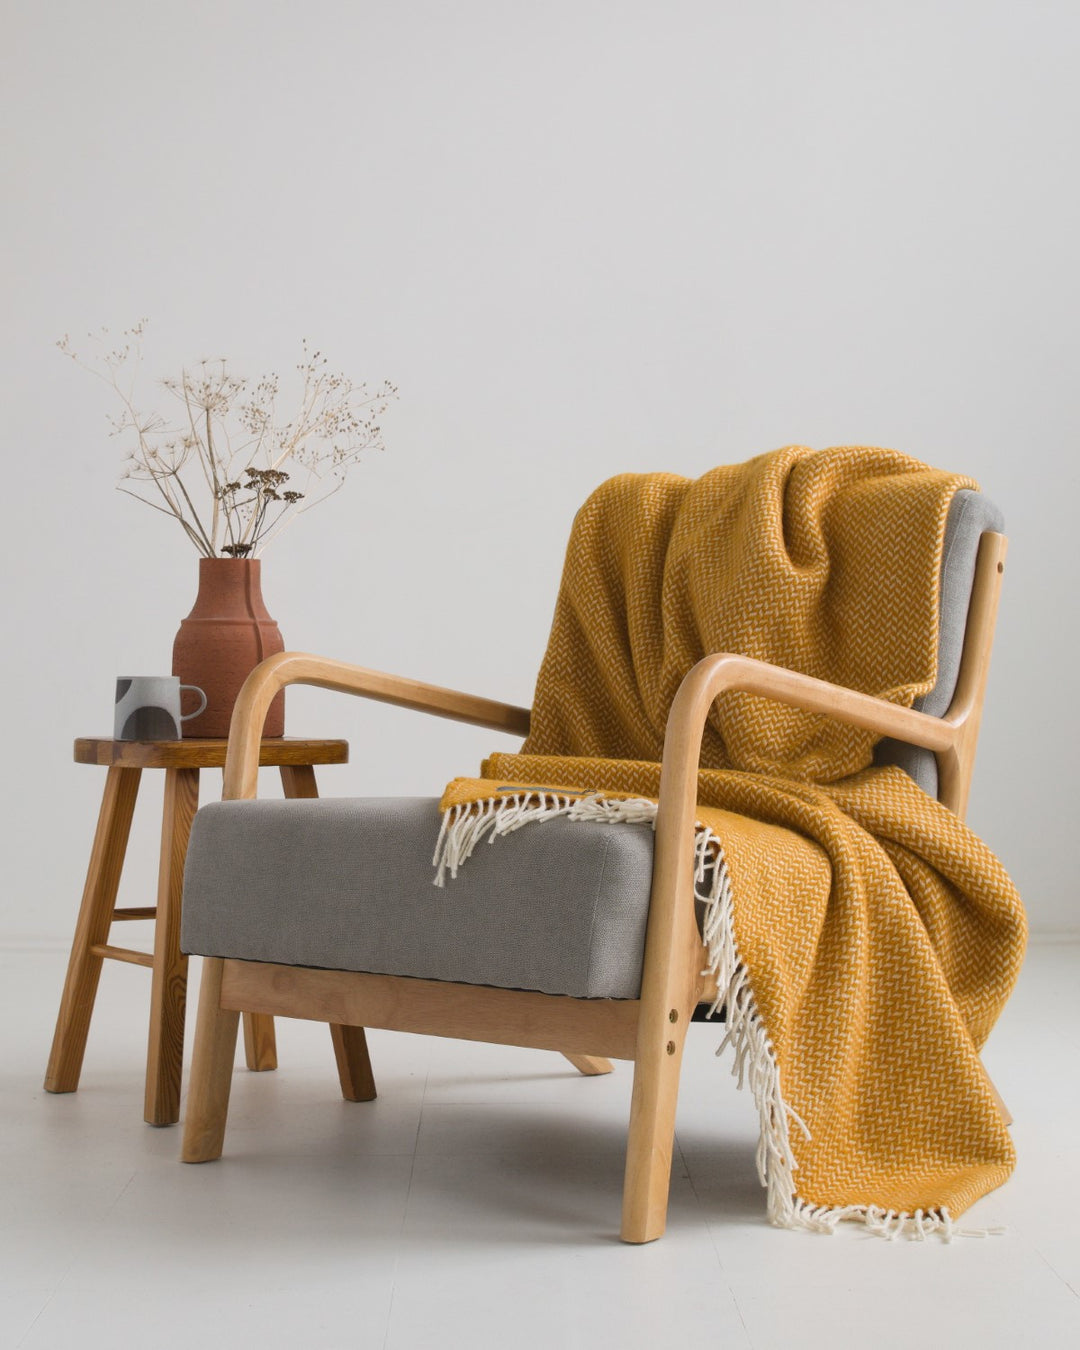 Large yellow herringbone wool blanket draped over a lounge chair